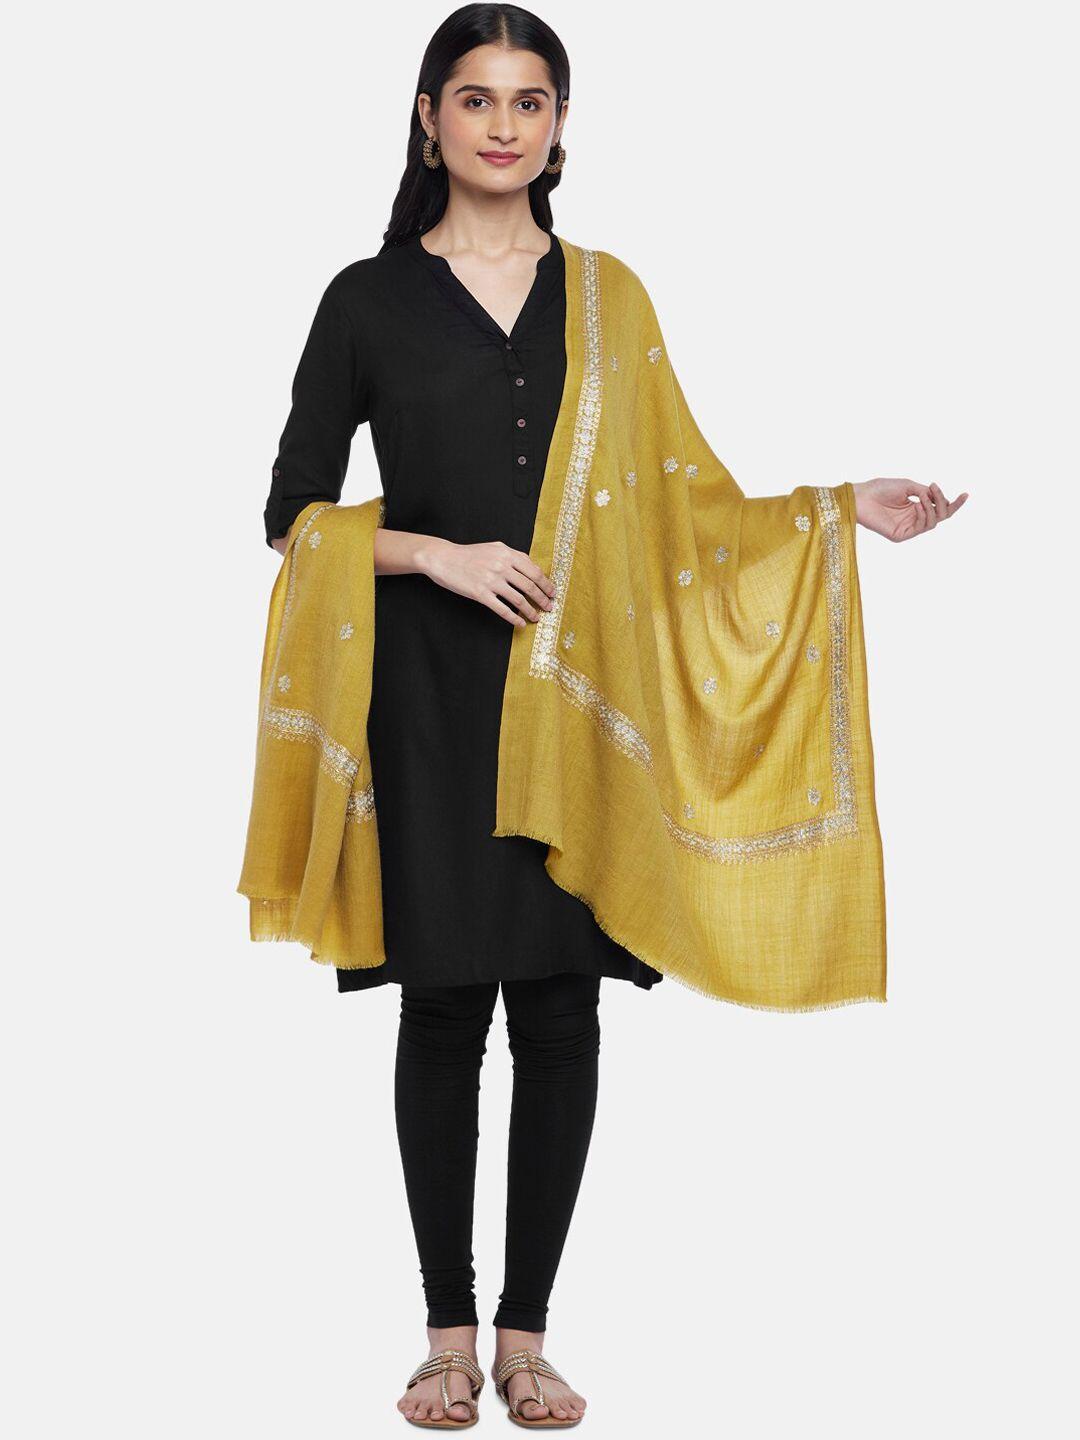 rangmanch by pantaloons women mustard yellow emberoidered shawl